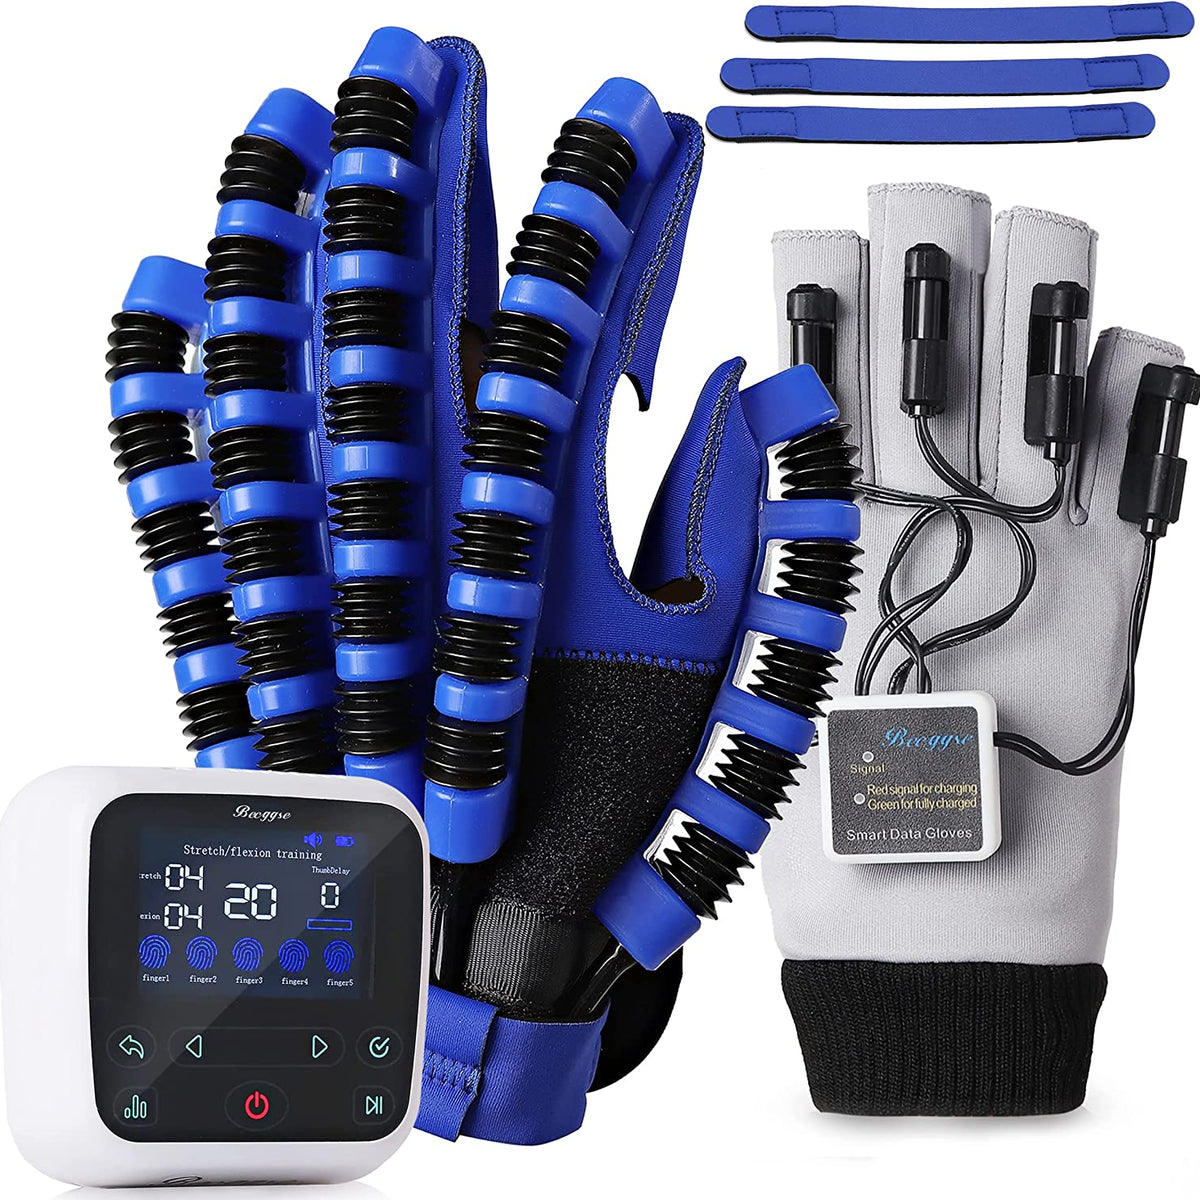 Robotic Rehabilitation Exoskeleton Glove for Stroke and TBI